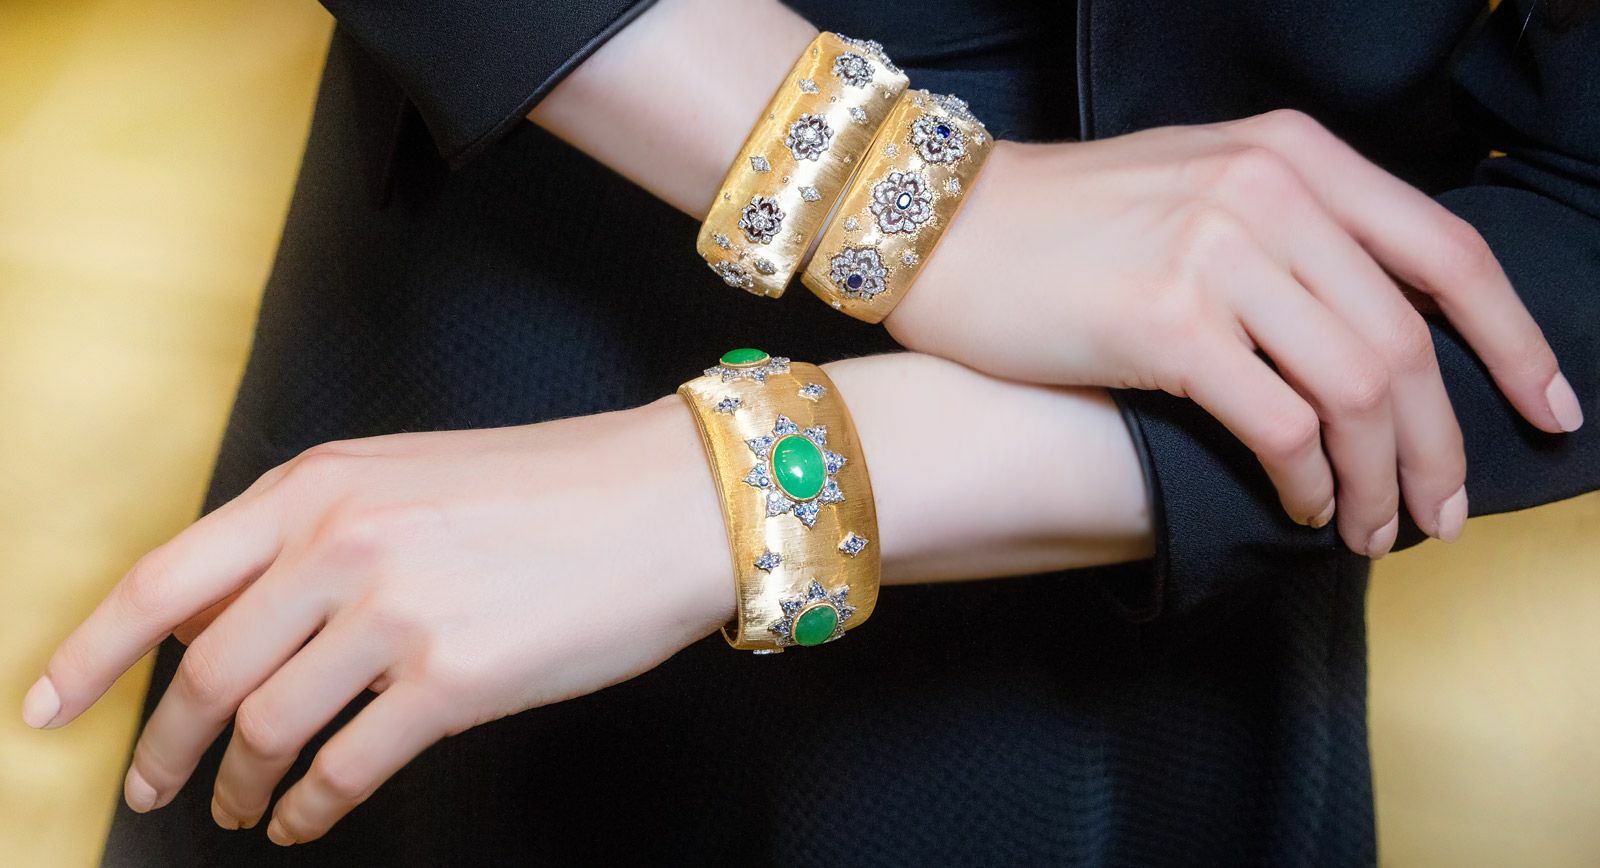 Buccellati cuff bracelets in white and yellow gold